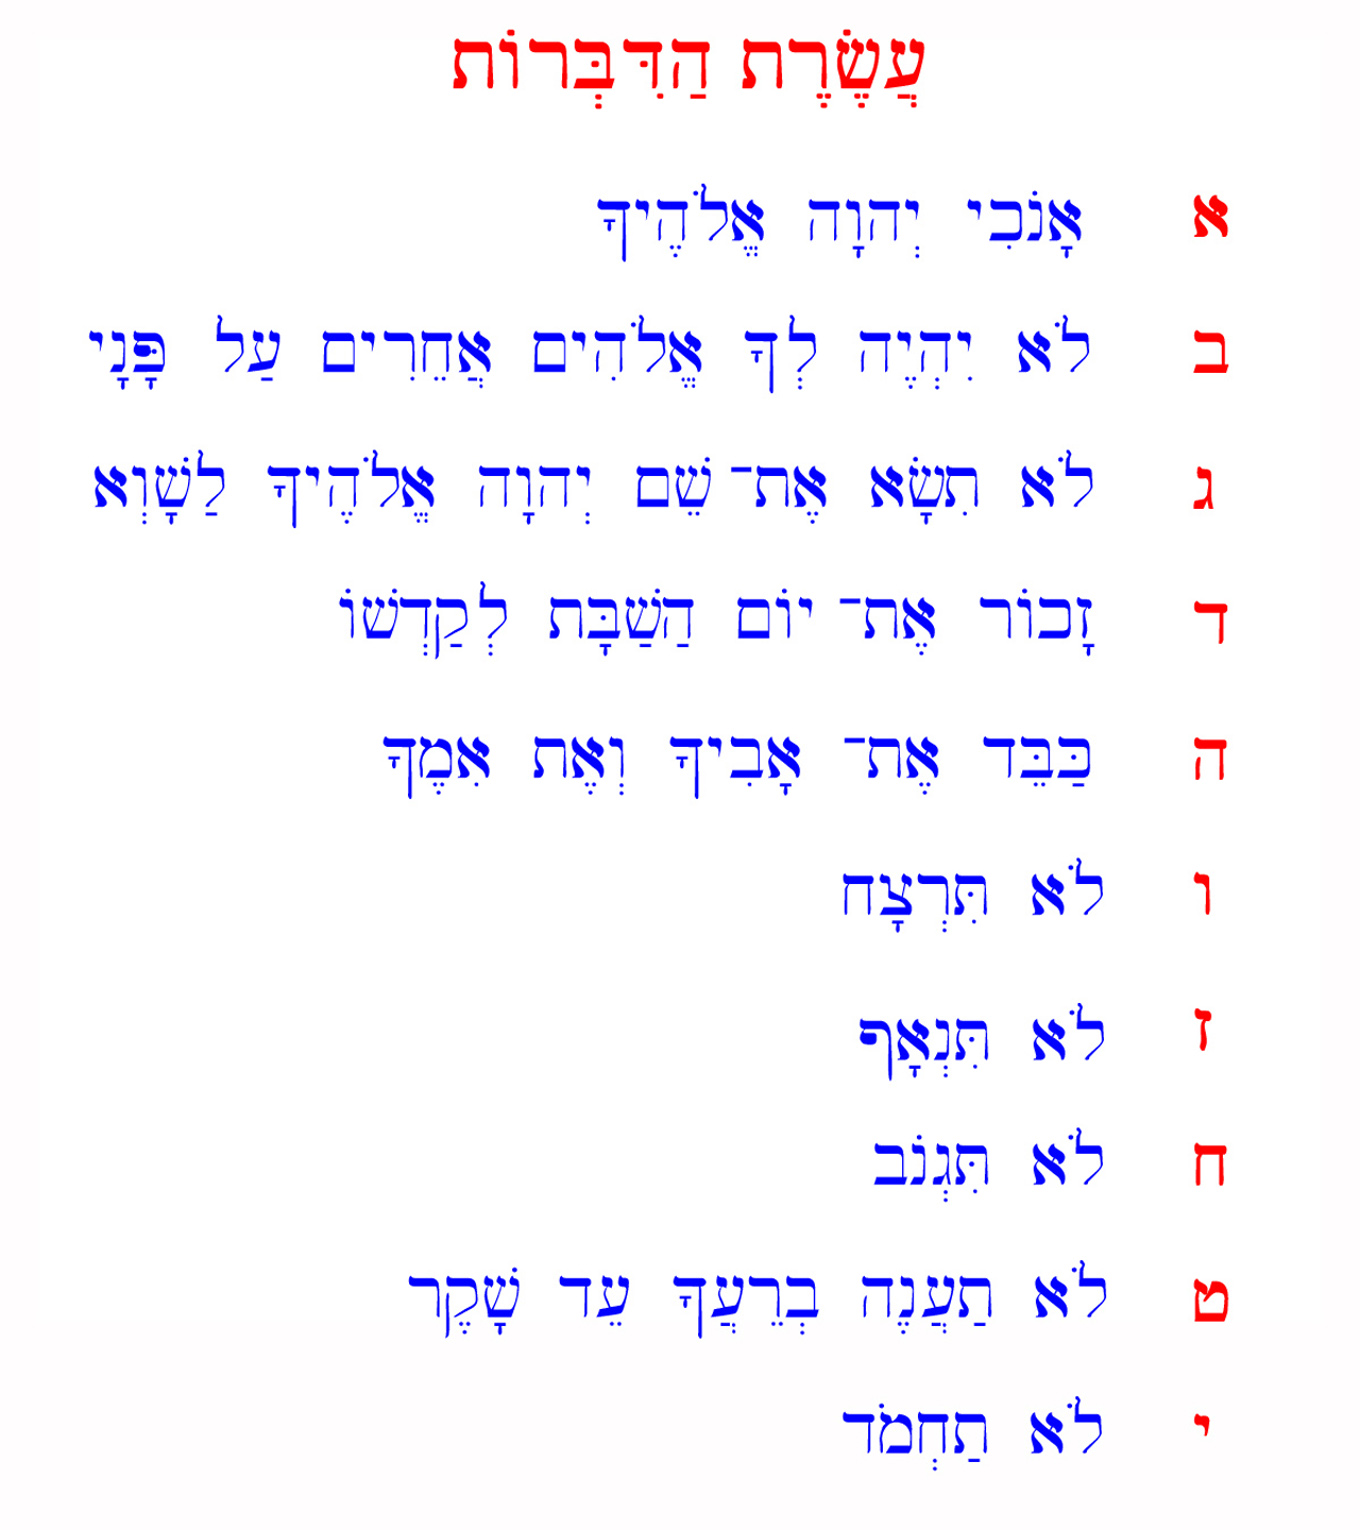 The alphabet of the Hebrew Scripture.